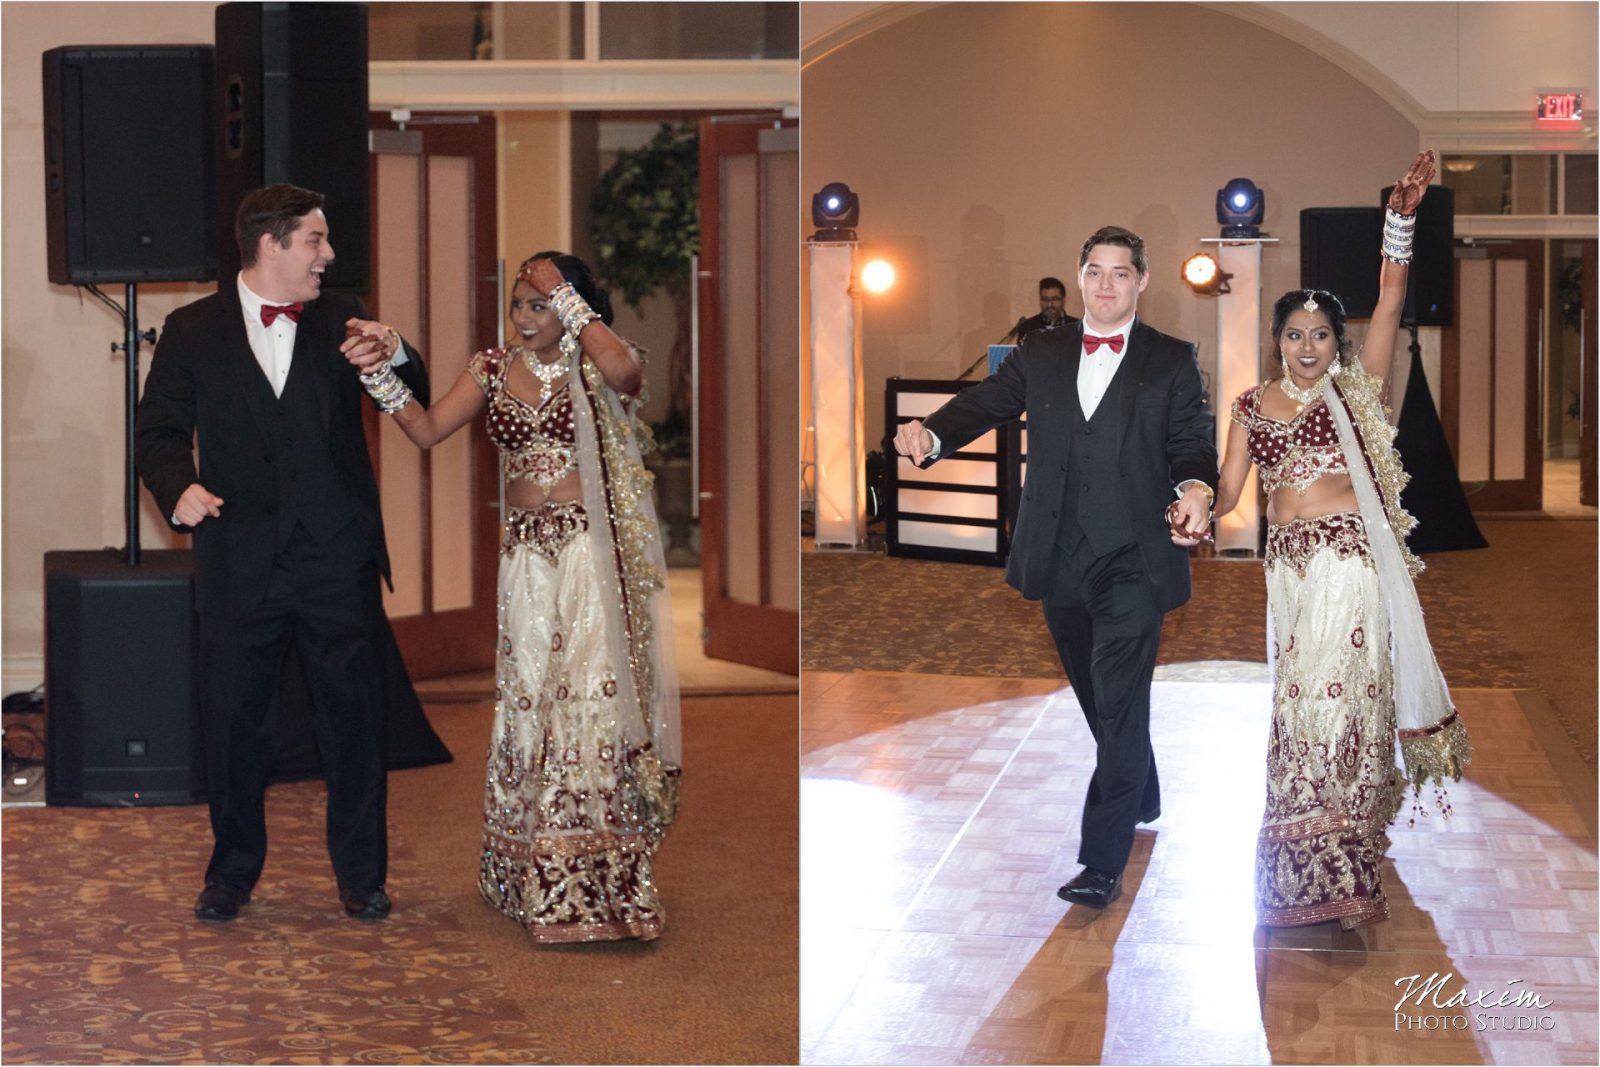 Savannah Center Indian Wedding reception